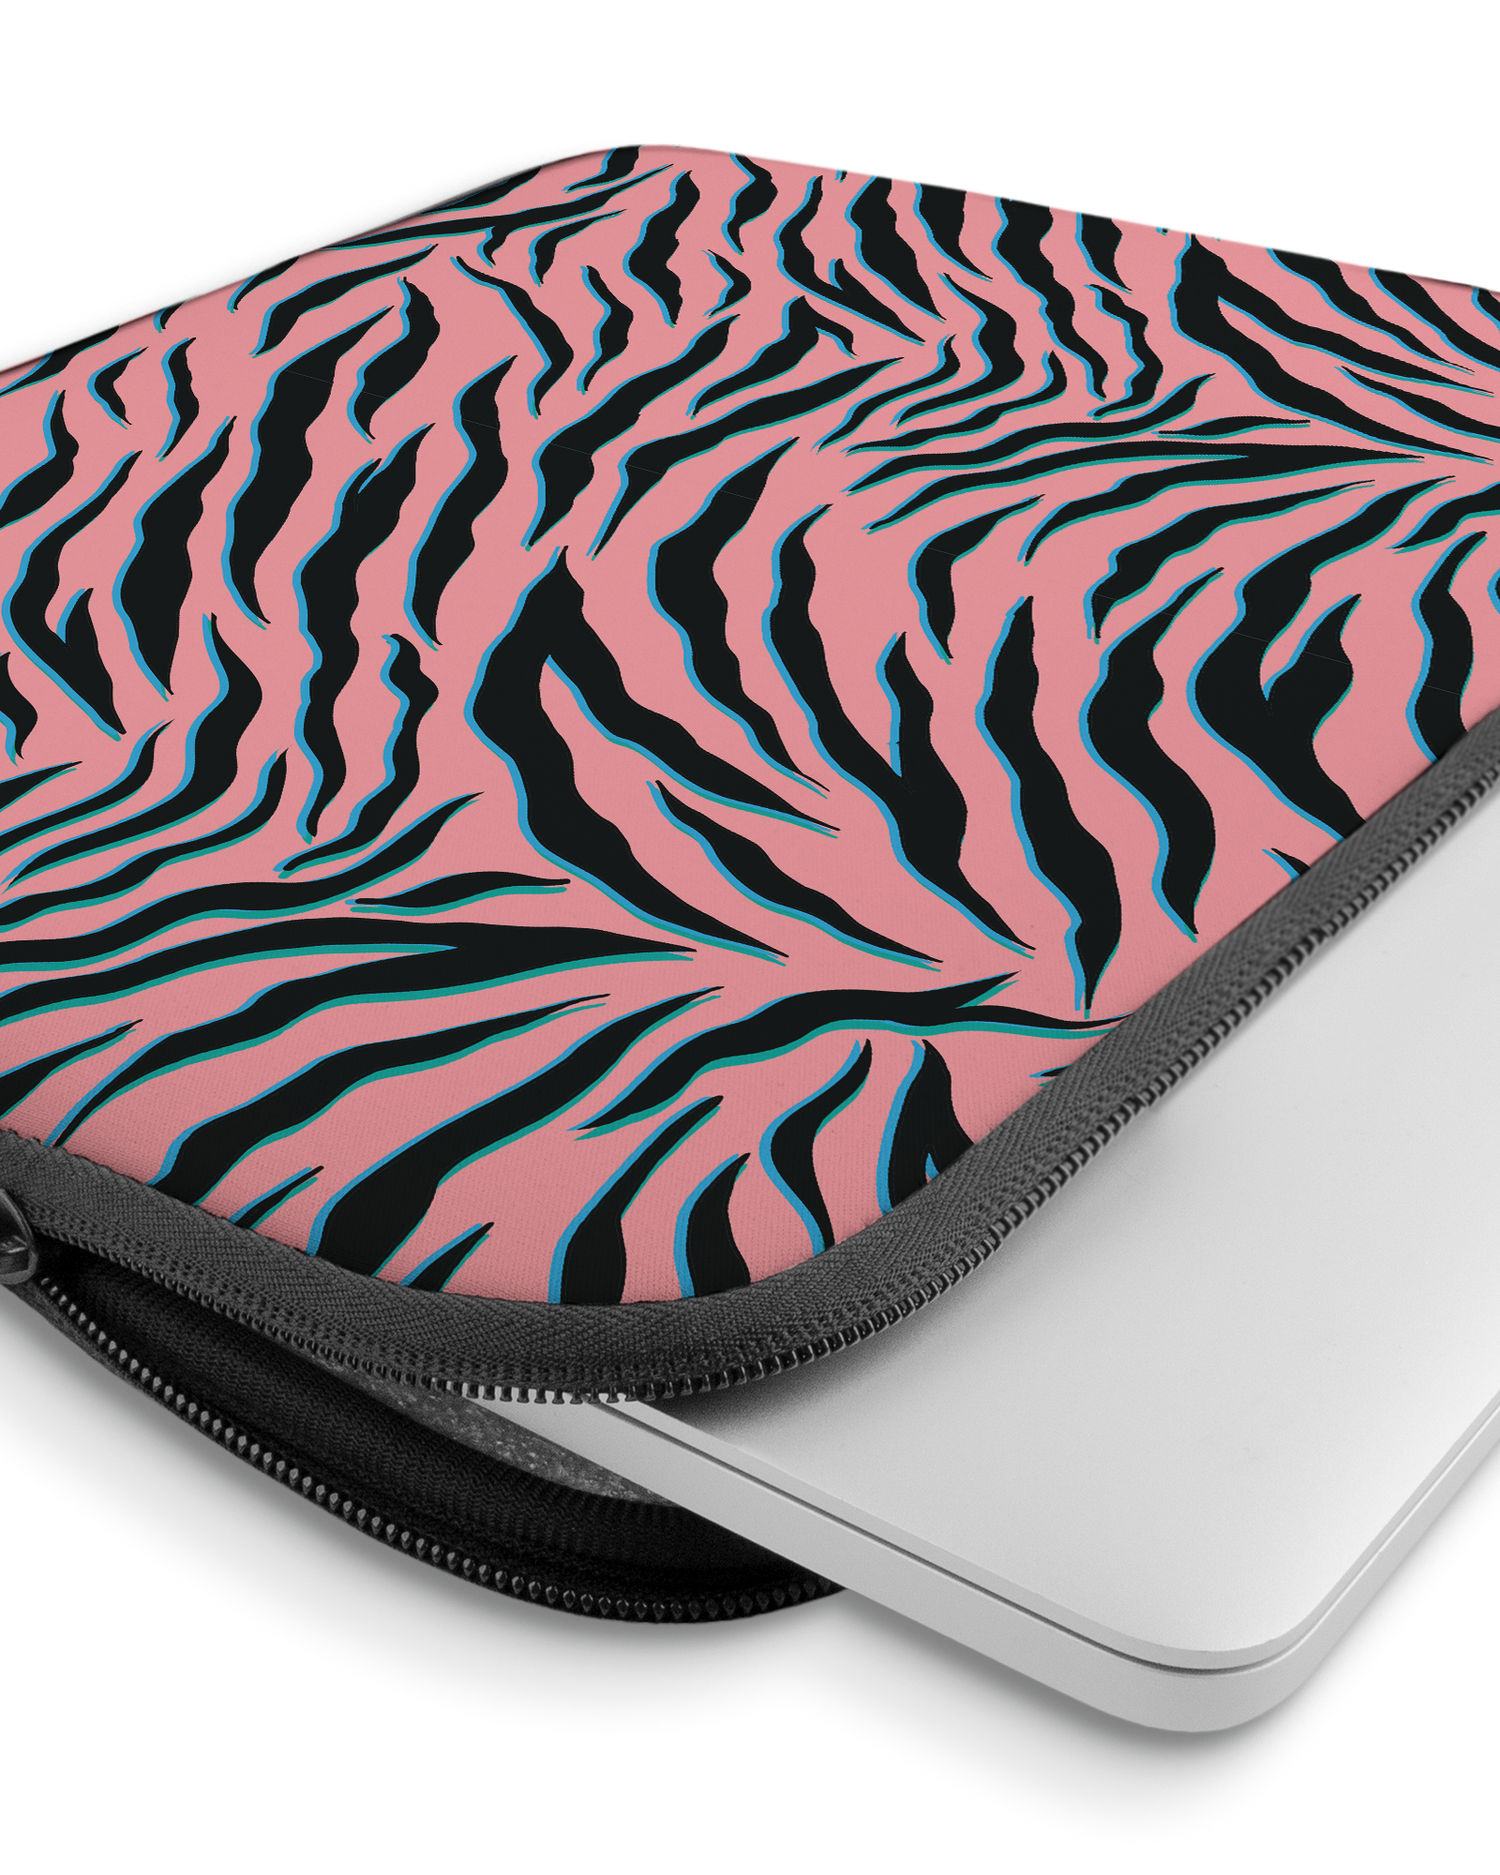 Pink Zebra Laptophülle 15 Zoll mit Gerät im Inneren